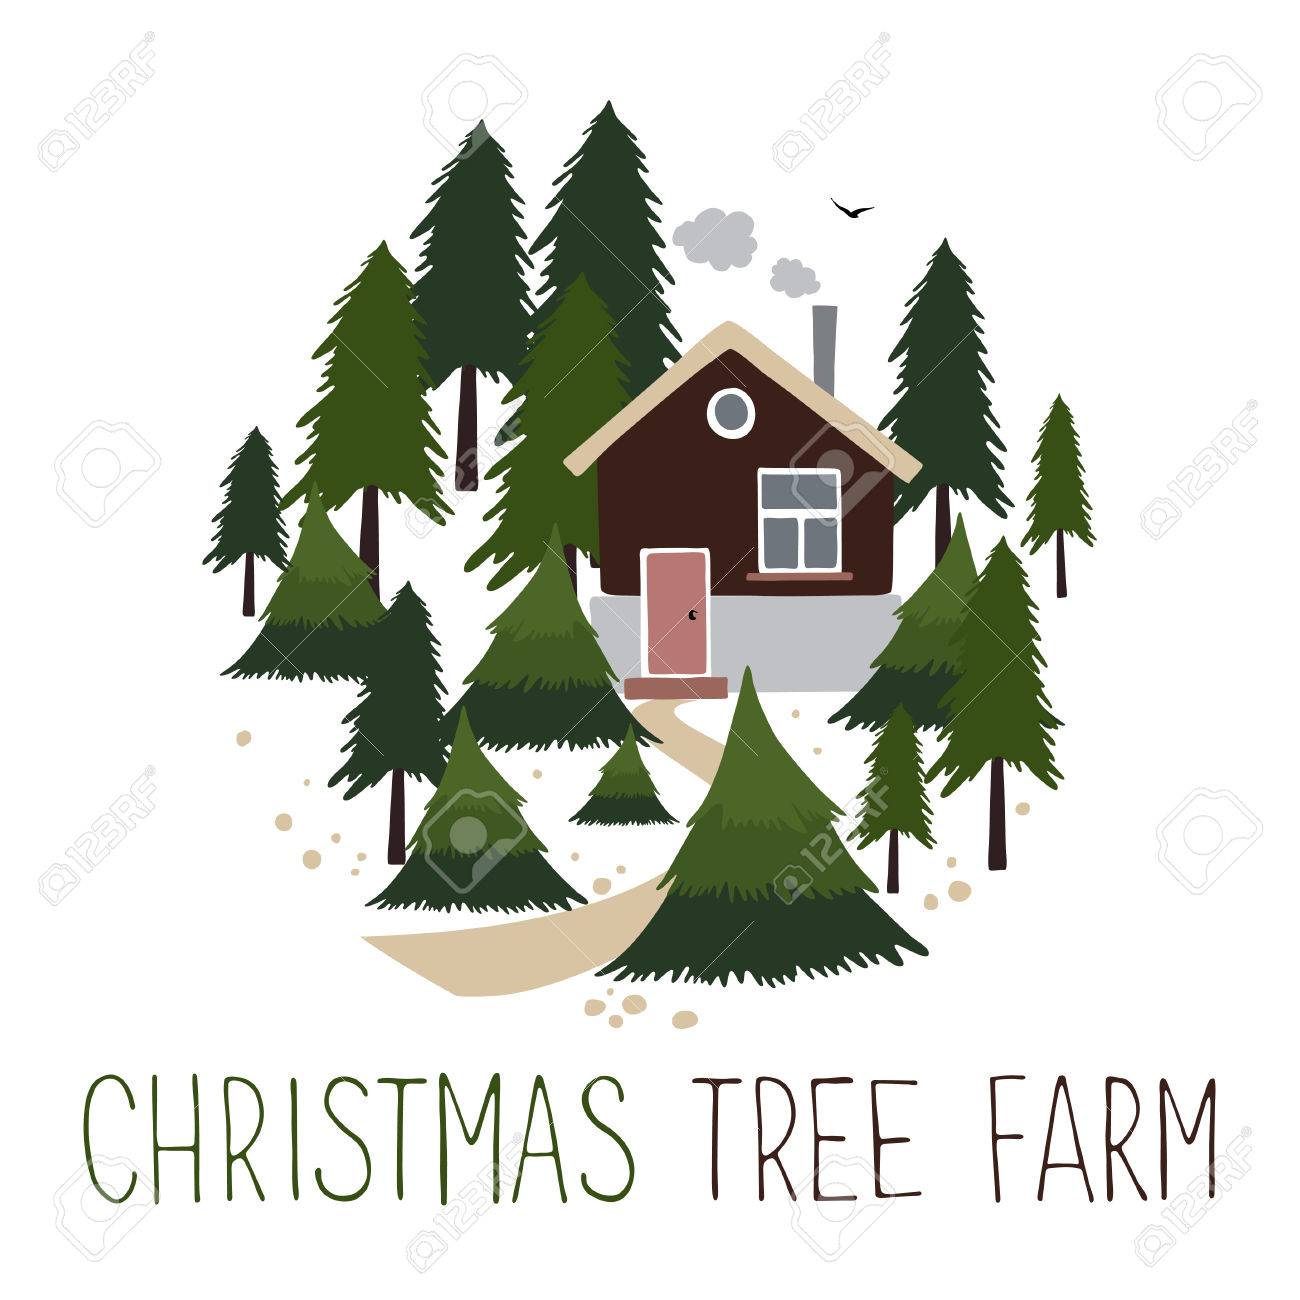 Christmas tree farm. Vector illustration. Christmas Trees for...